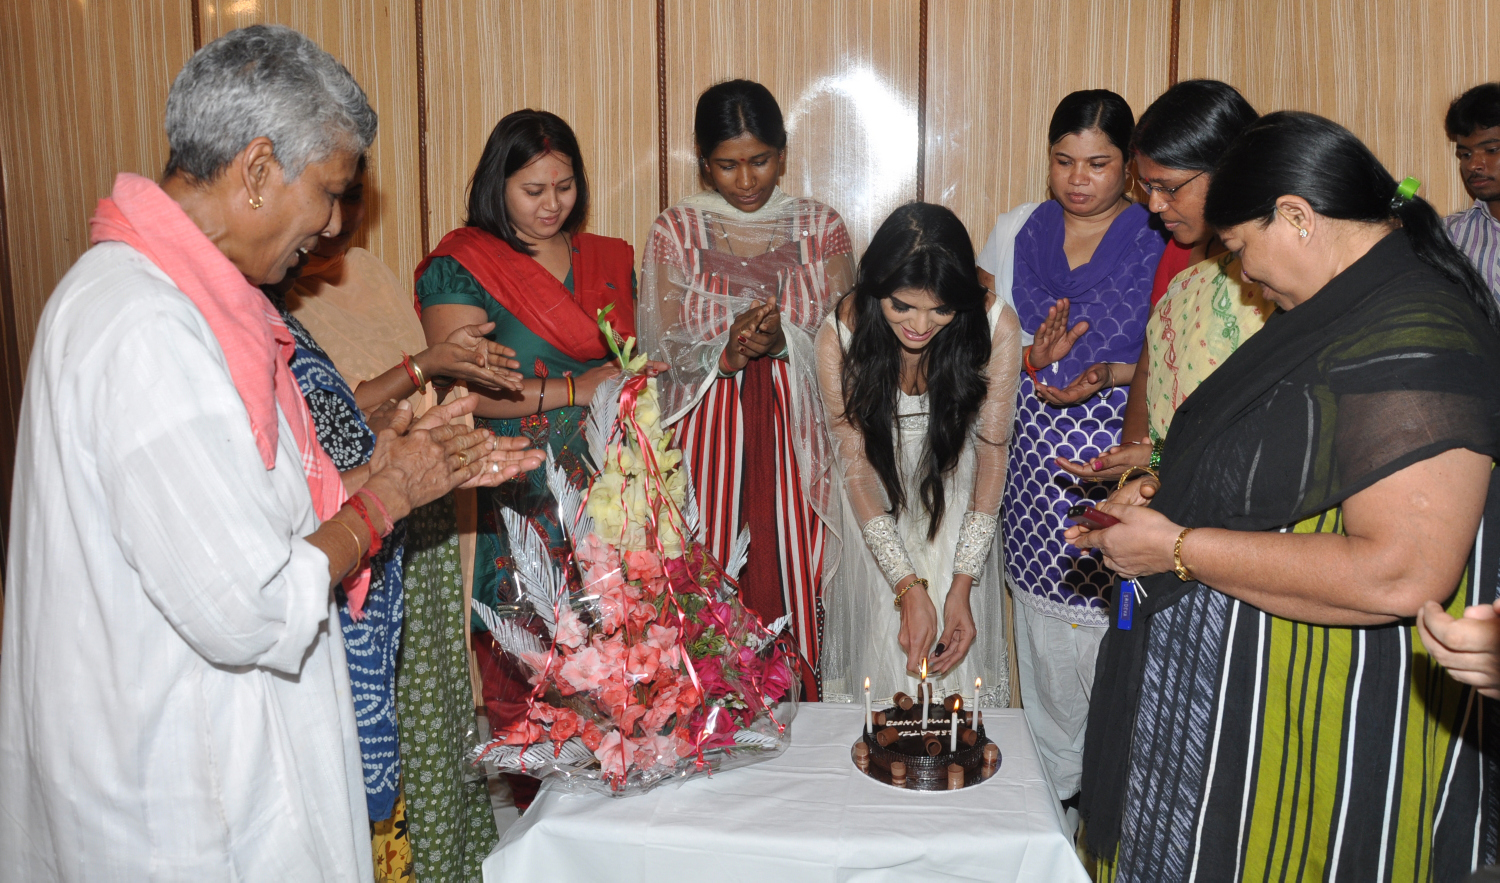 Sherlyn Chopras celebrates her birthday with the sex workers at Kamathipura, Mumbai on 11th Feb 2013